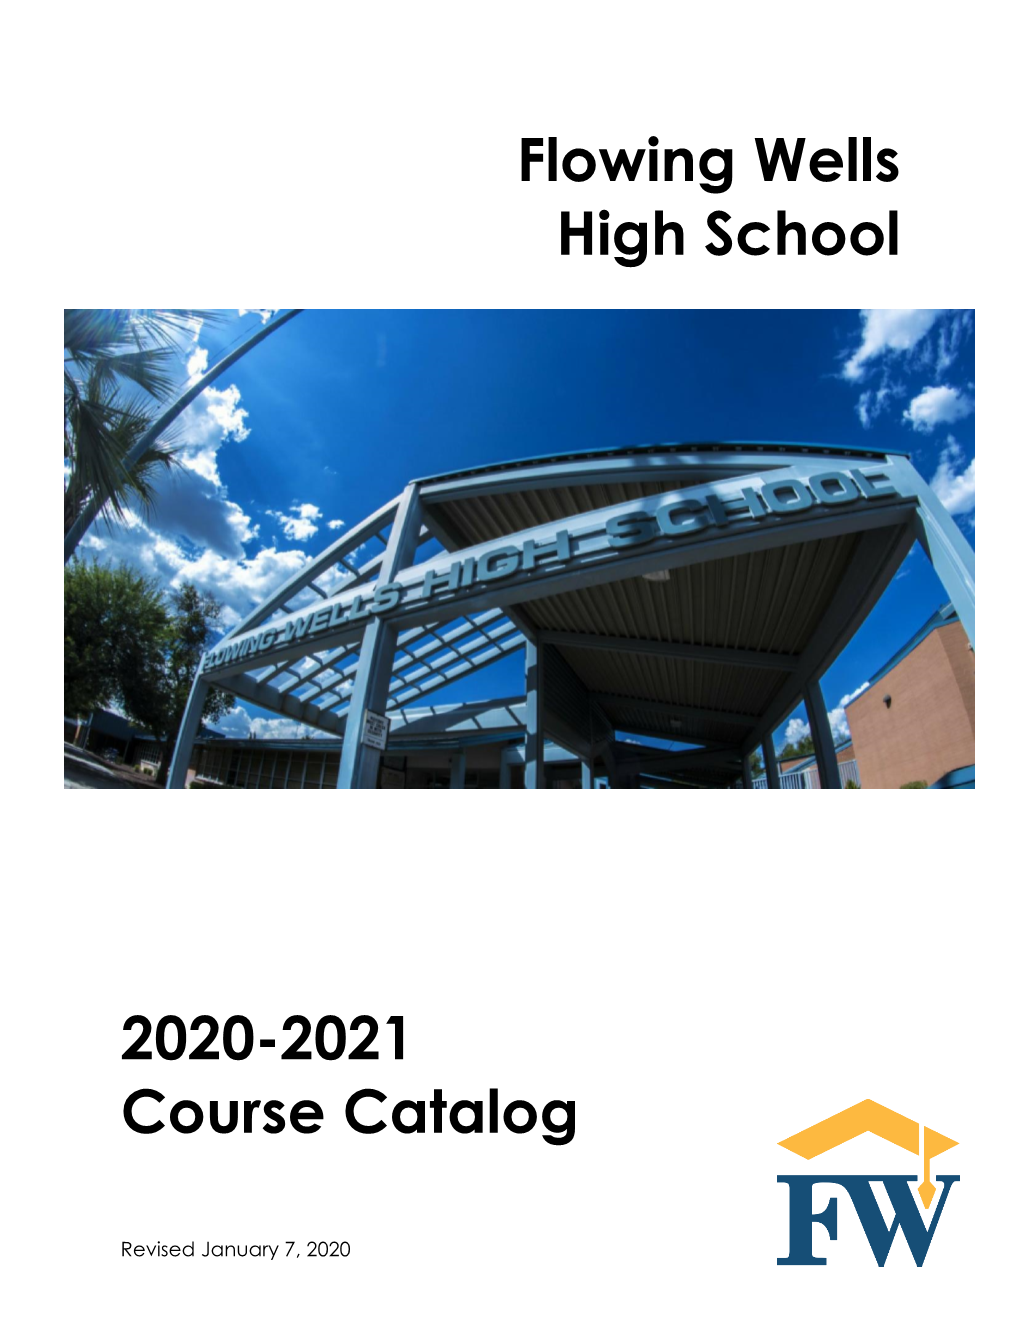 Flowing Wells High School 2020-2021 Course Catalog